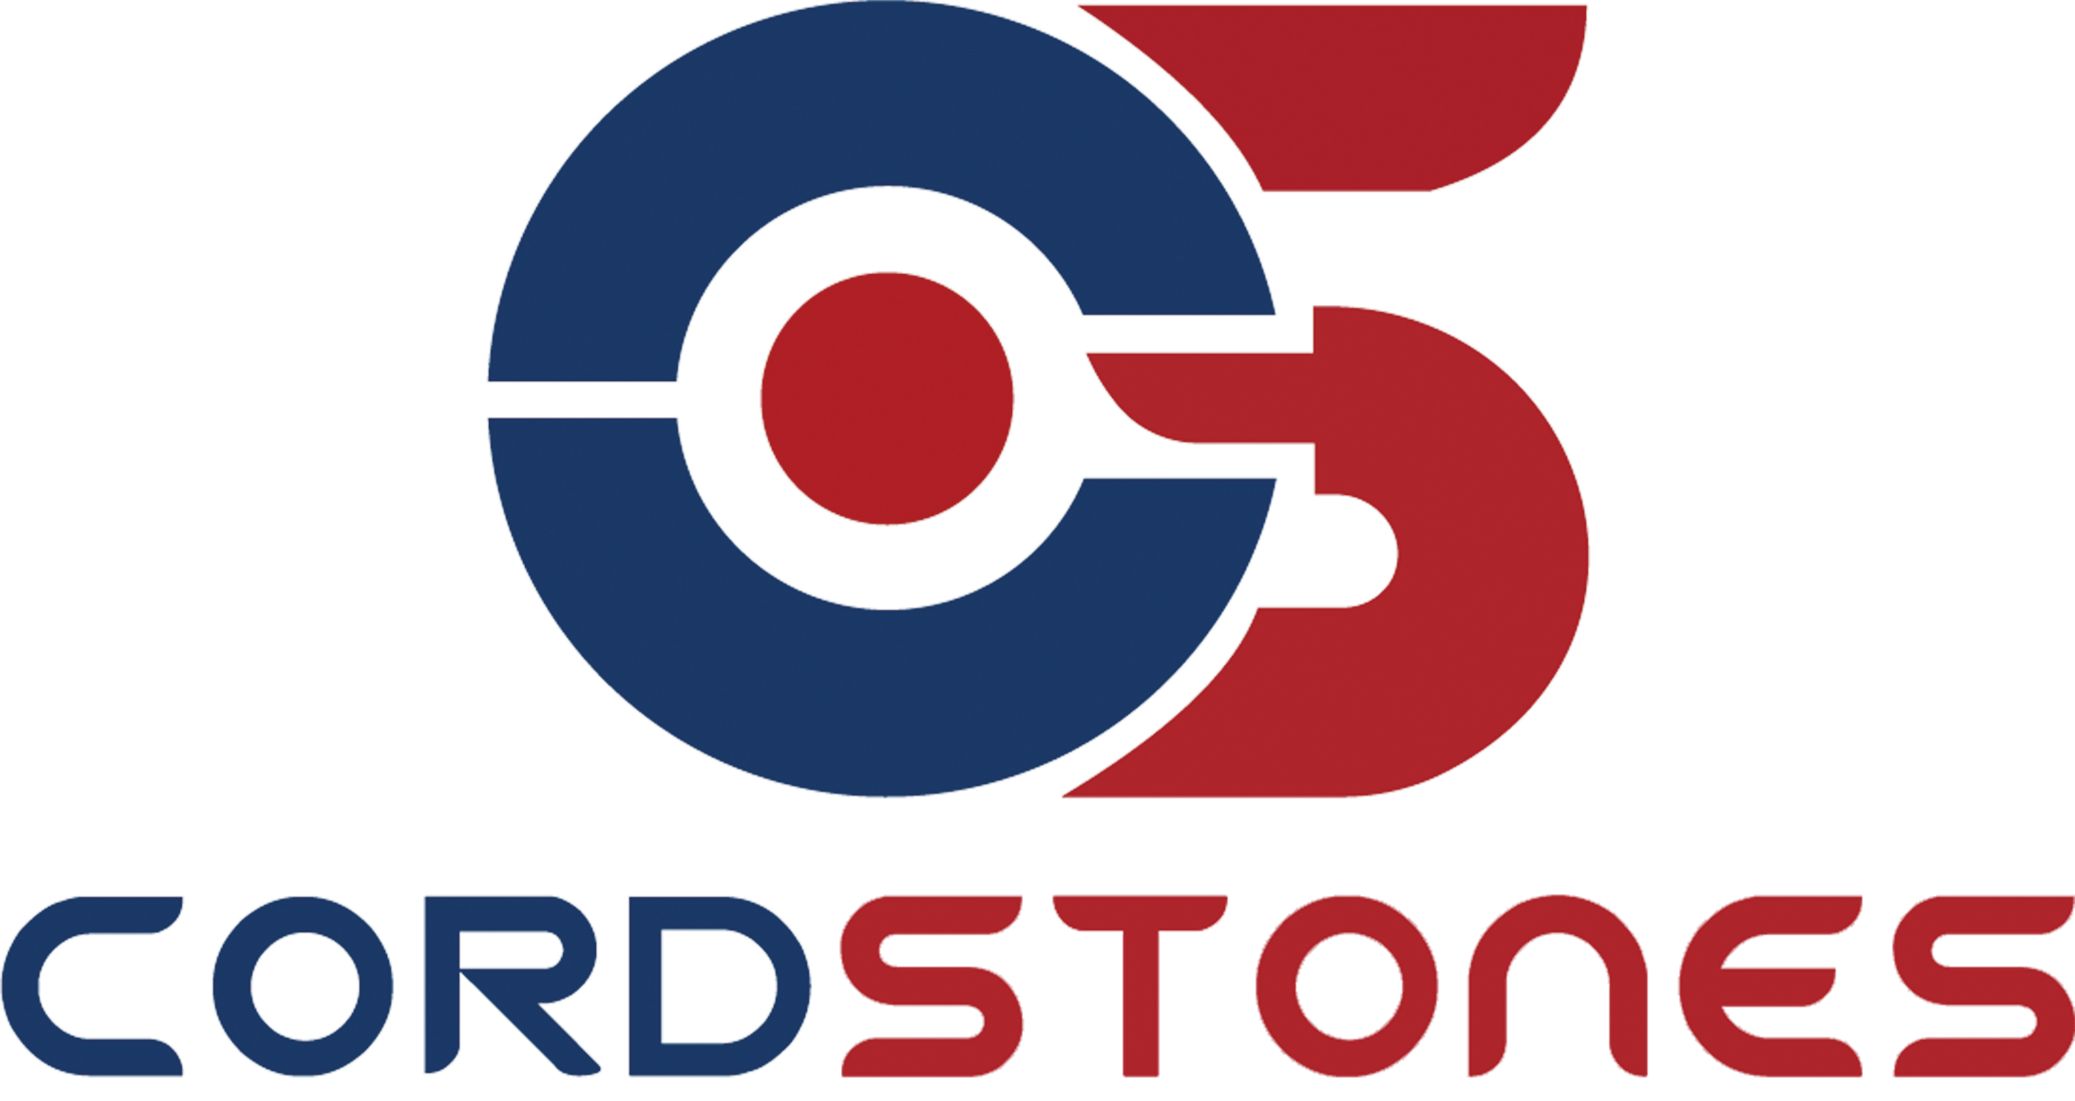 CS-Logo